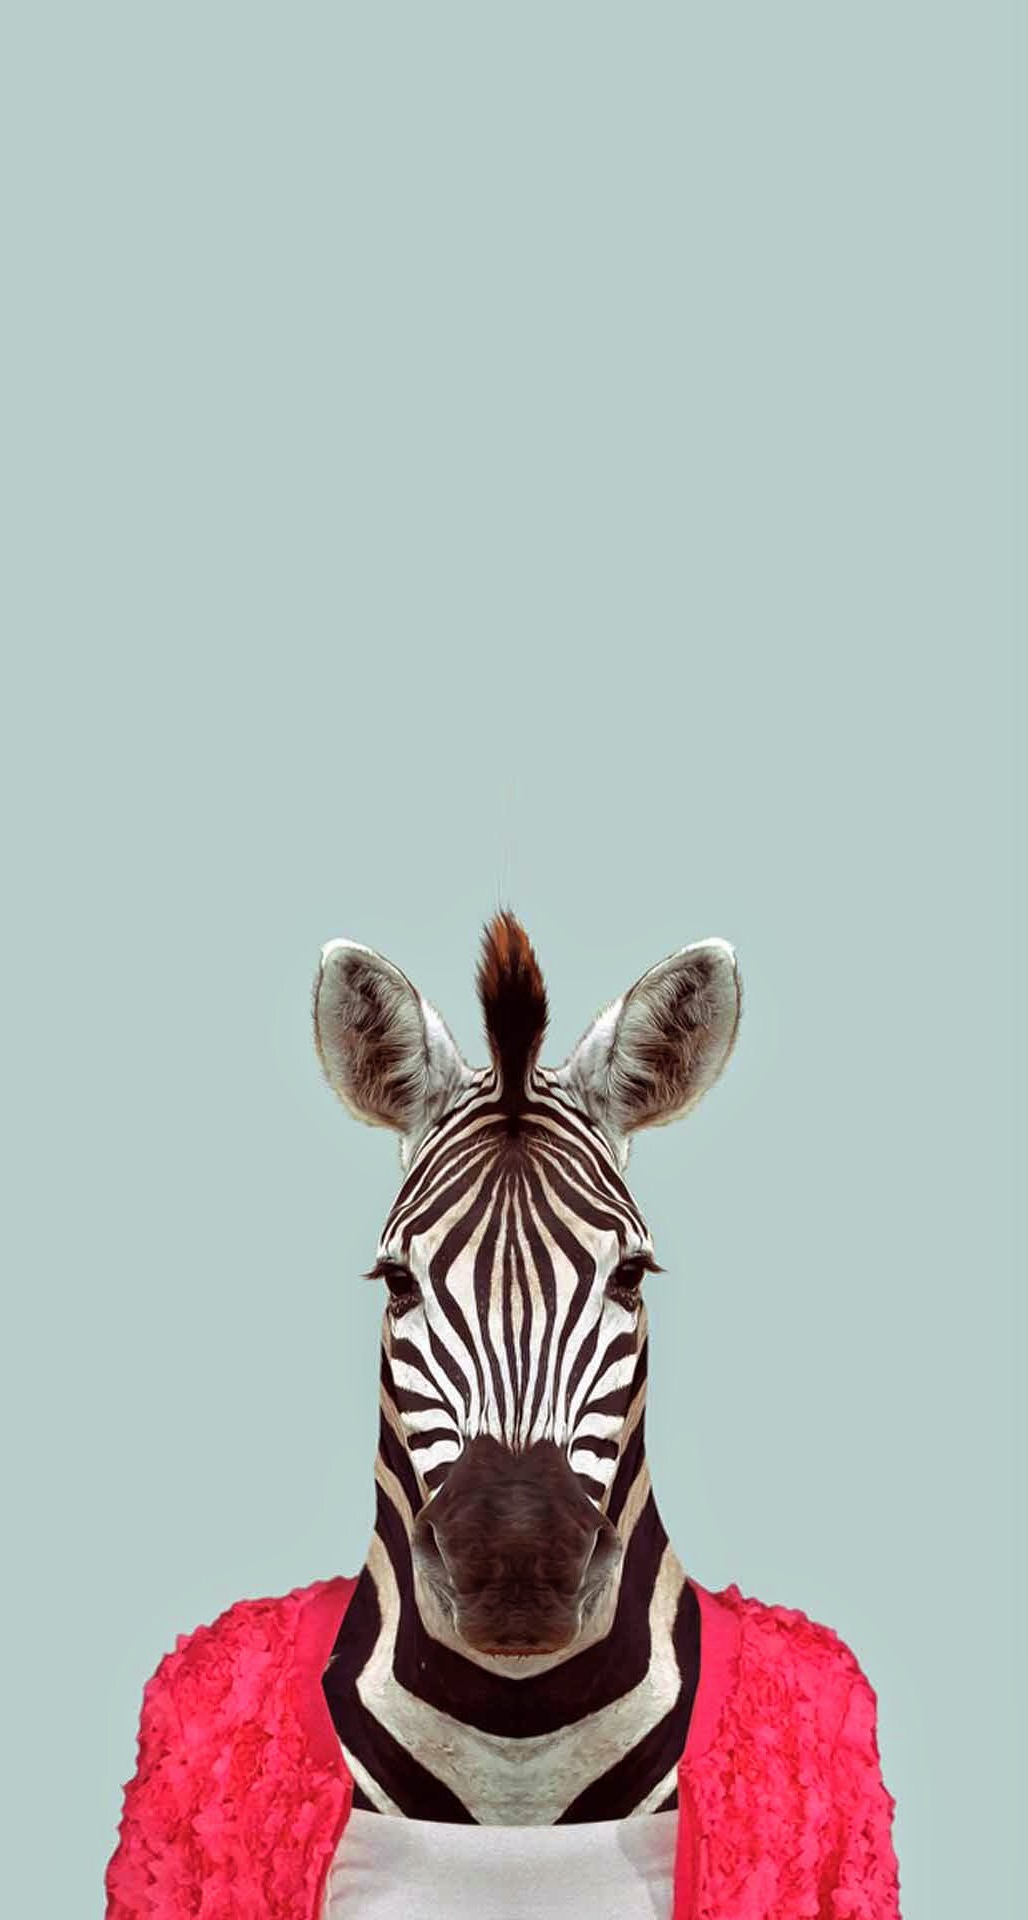 Zebra Funny Animal Portrait iPhone 6 Plus HD Wallpaper